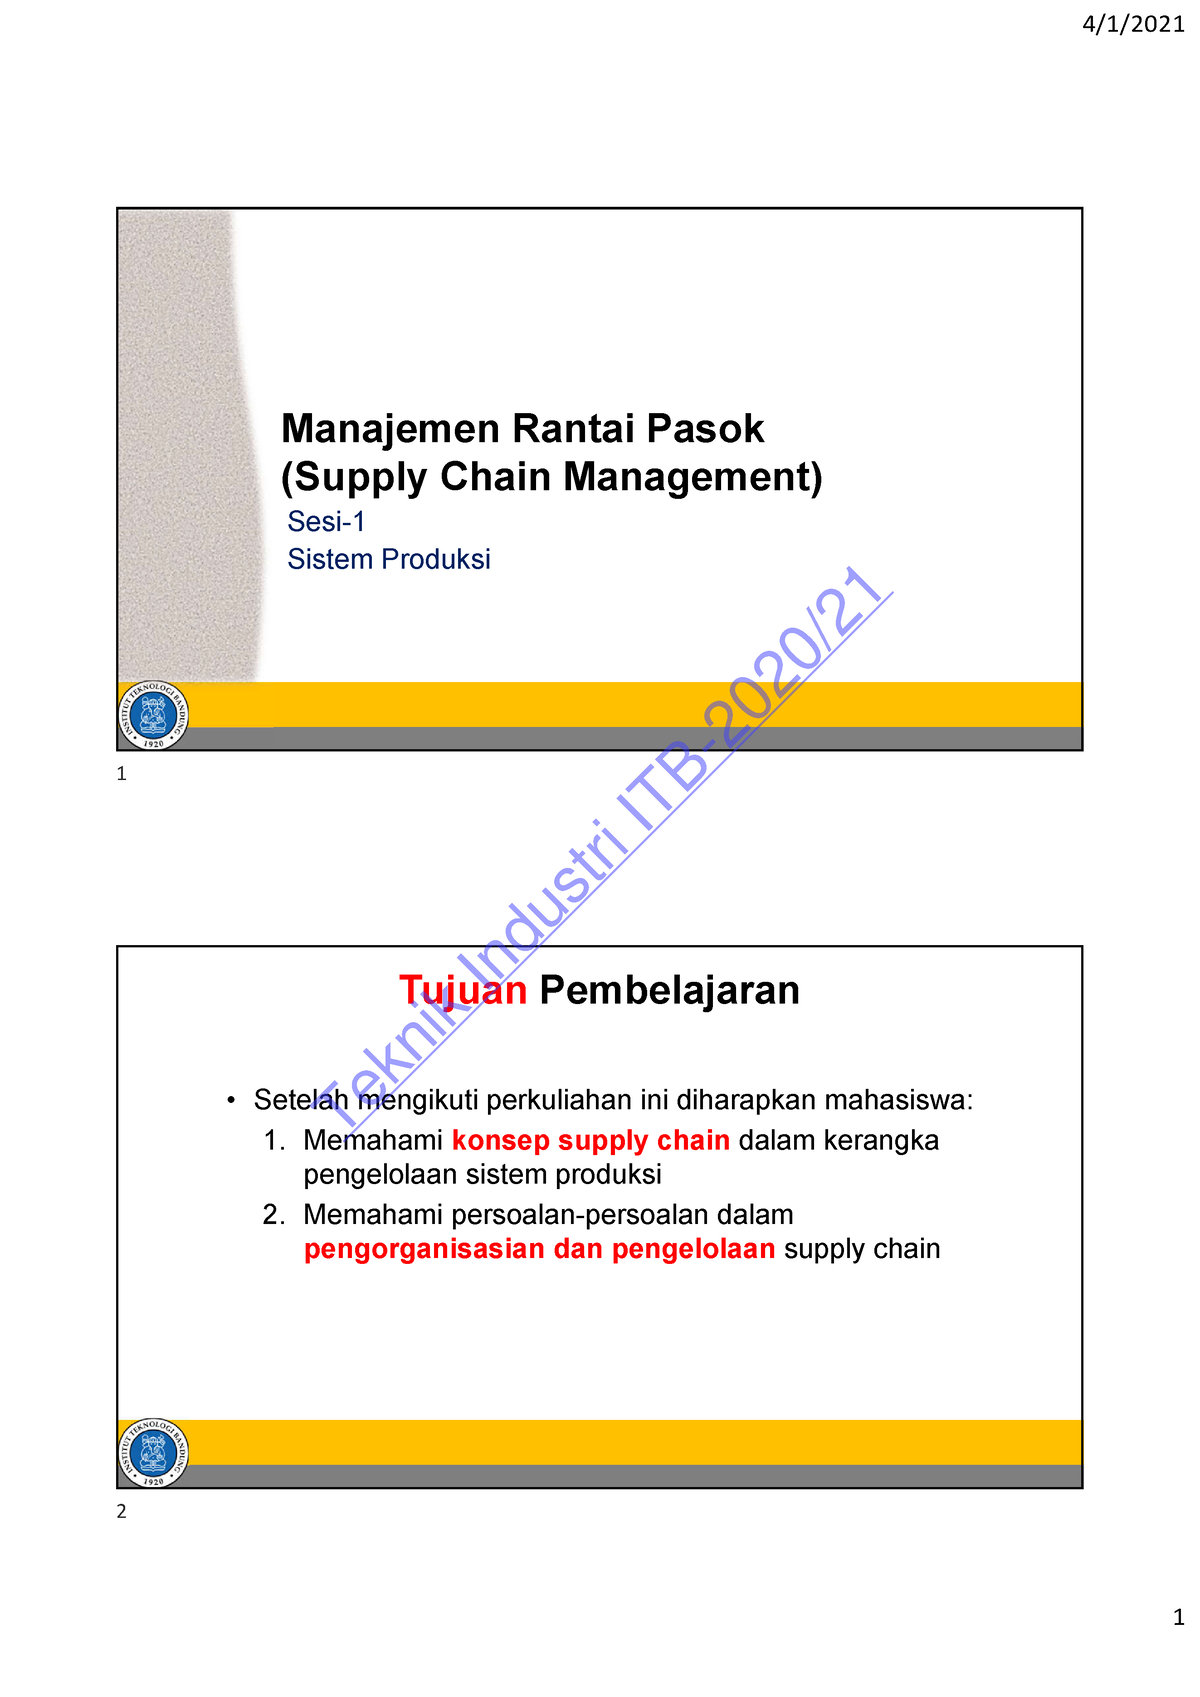 Sp10 Manajemen Rantai Pasok Manajemen Rantai Pasok Supply Chain Management Sesi 1 Sistem 1199